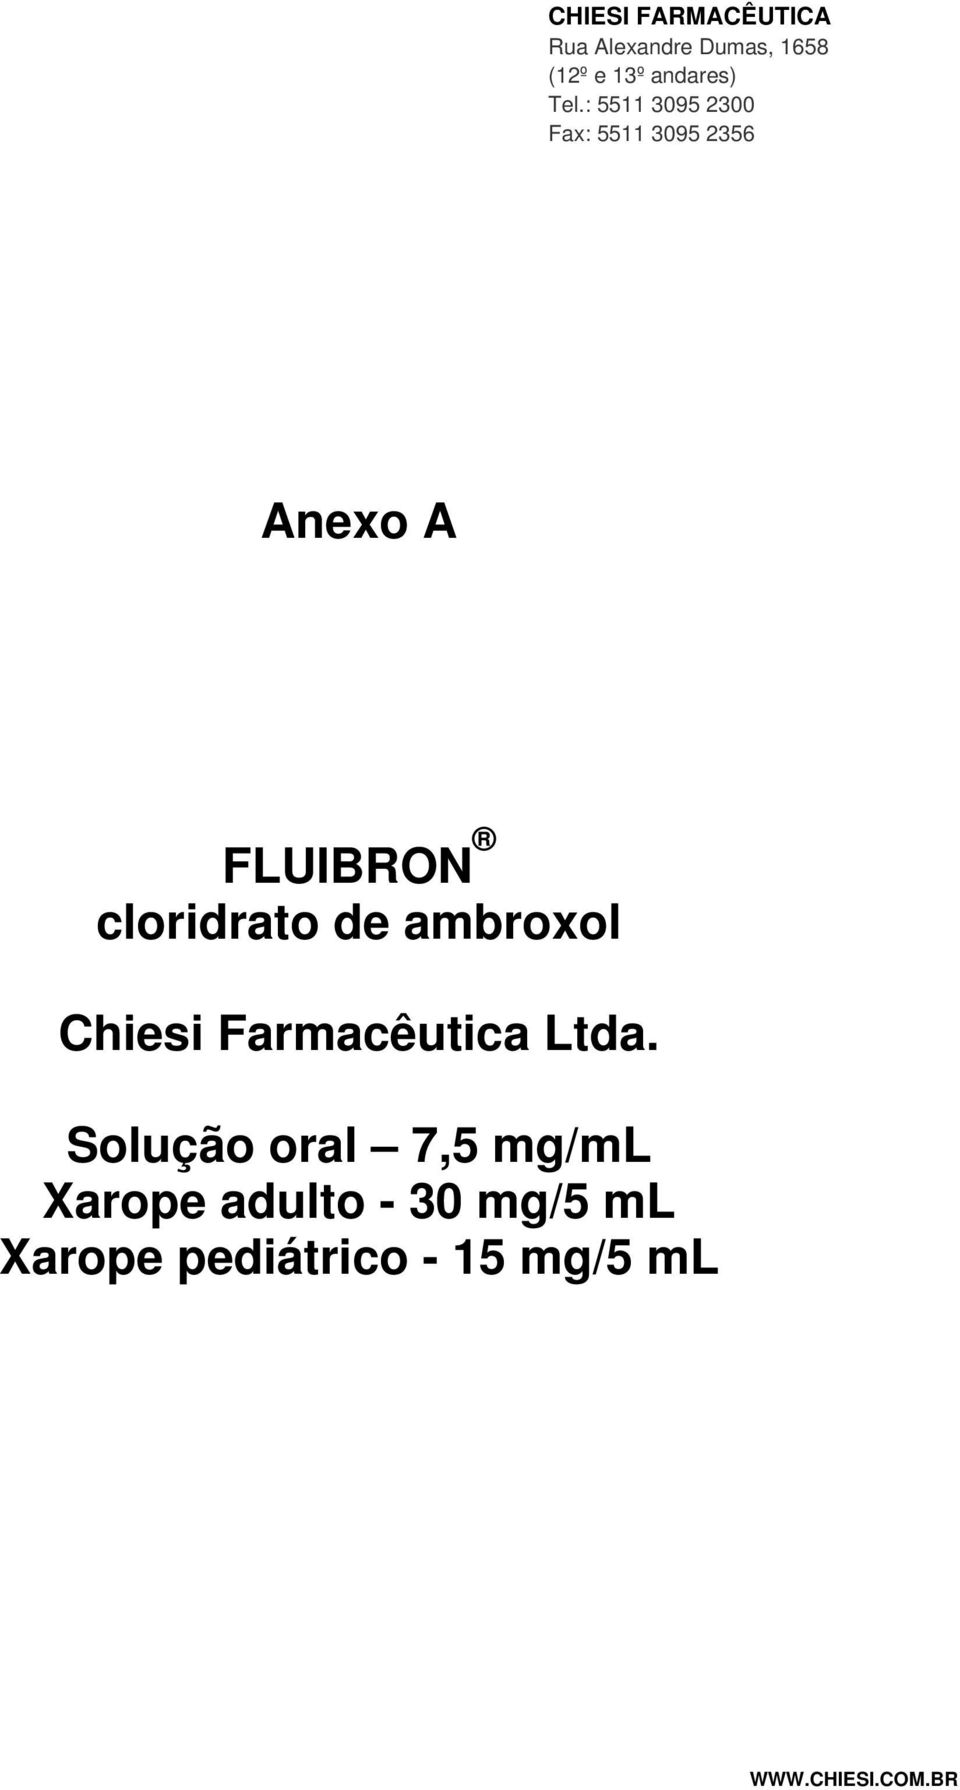 Solução oral 7,5 mg/ml Xarope adulto